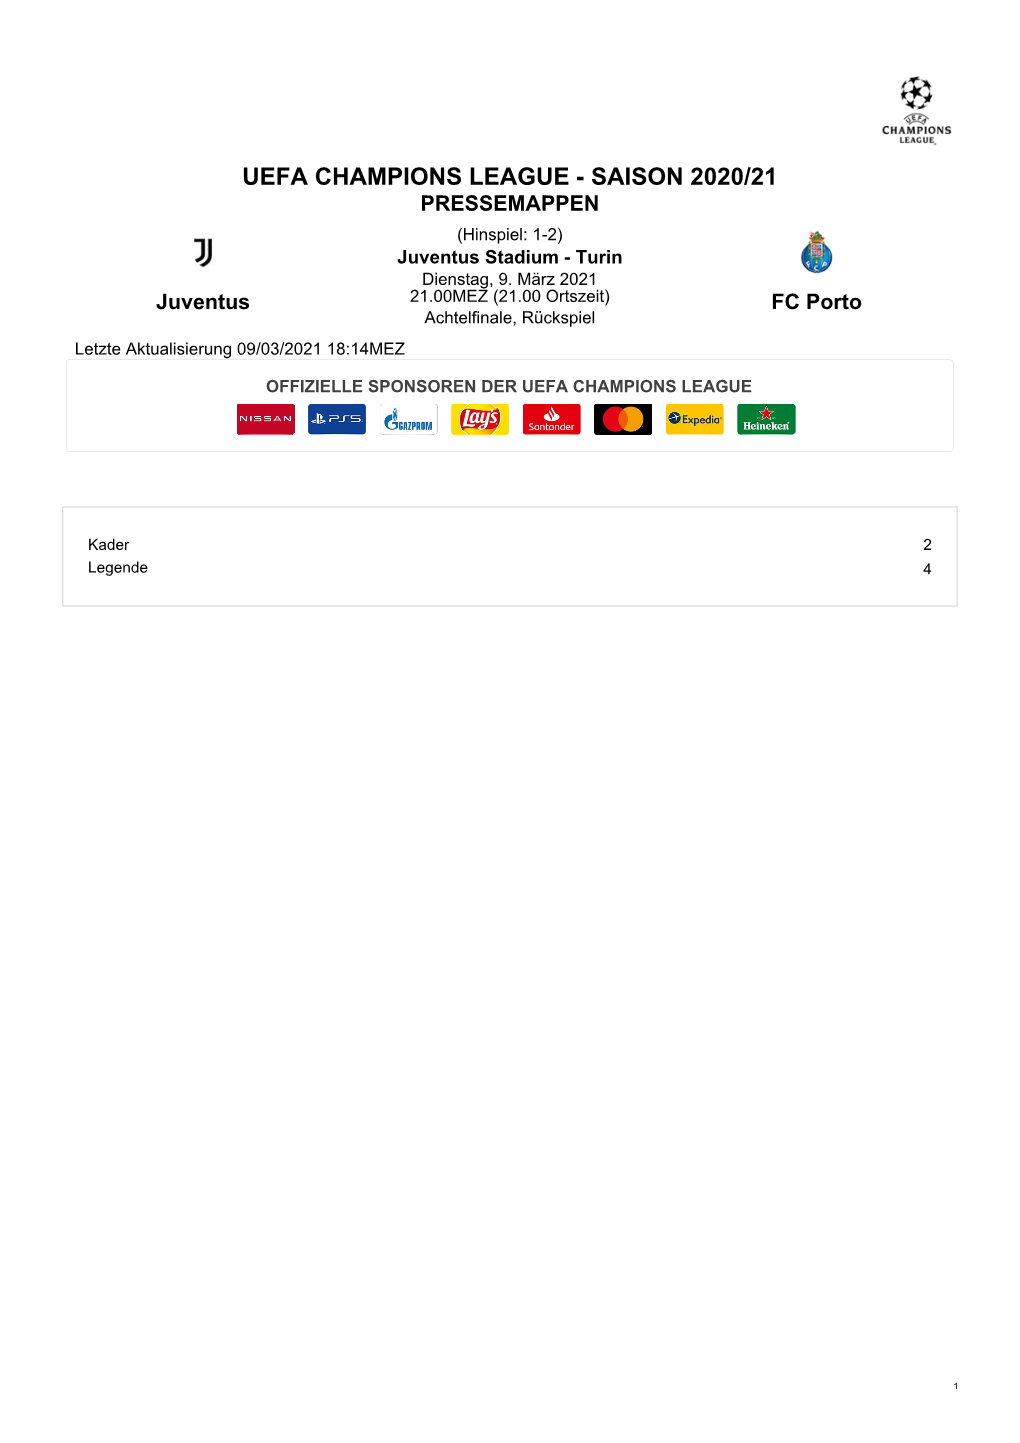 UEFA CHAMPIONS LEAGUE - SAISON 2020/21 PRESSEMAPPEN (Hinspiel: 1-2) Juventus Stadium - Turin Dienstag, 9